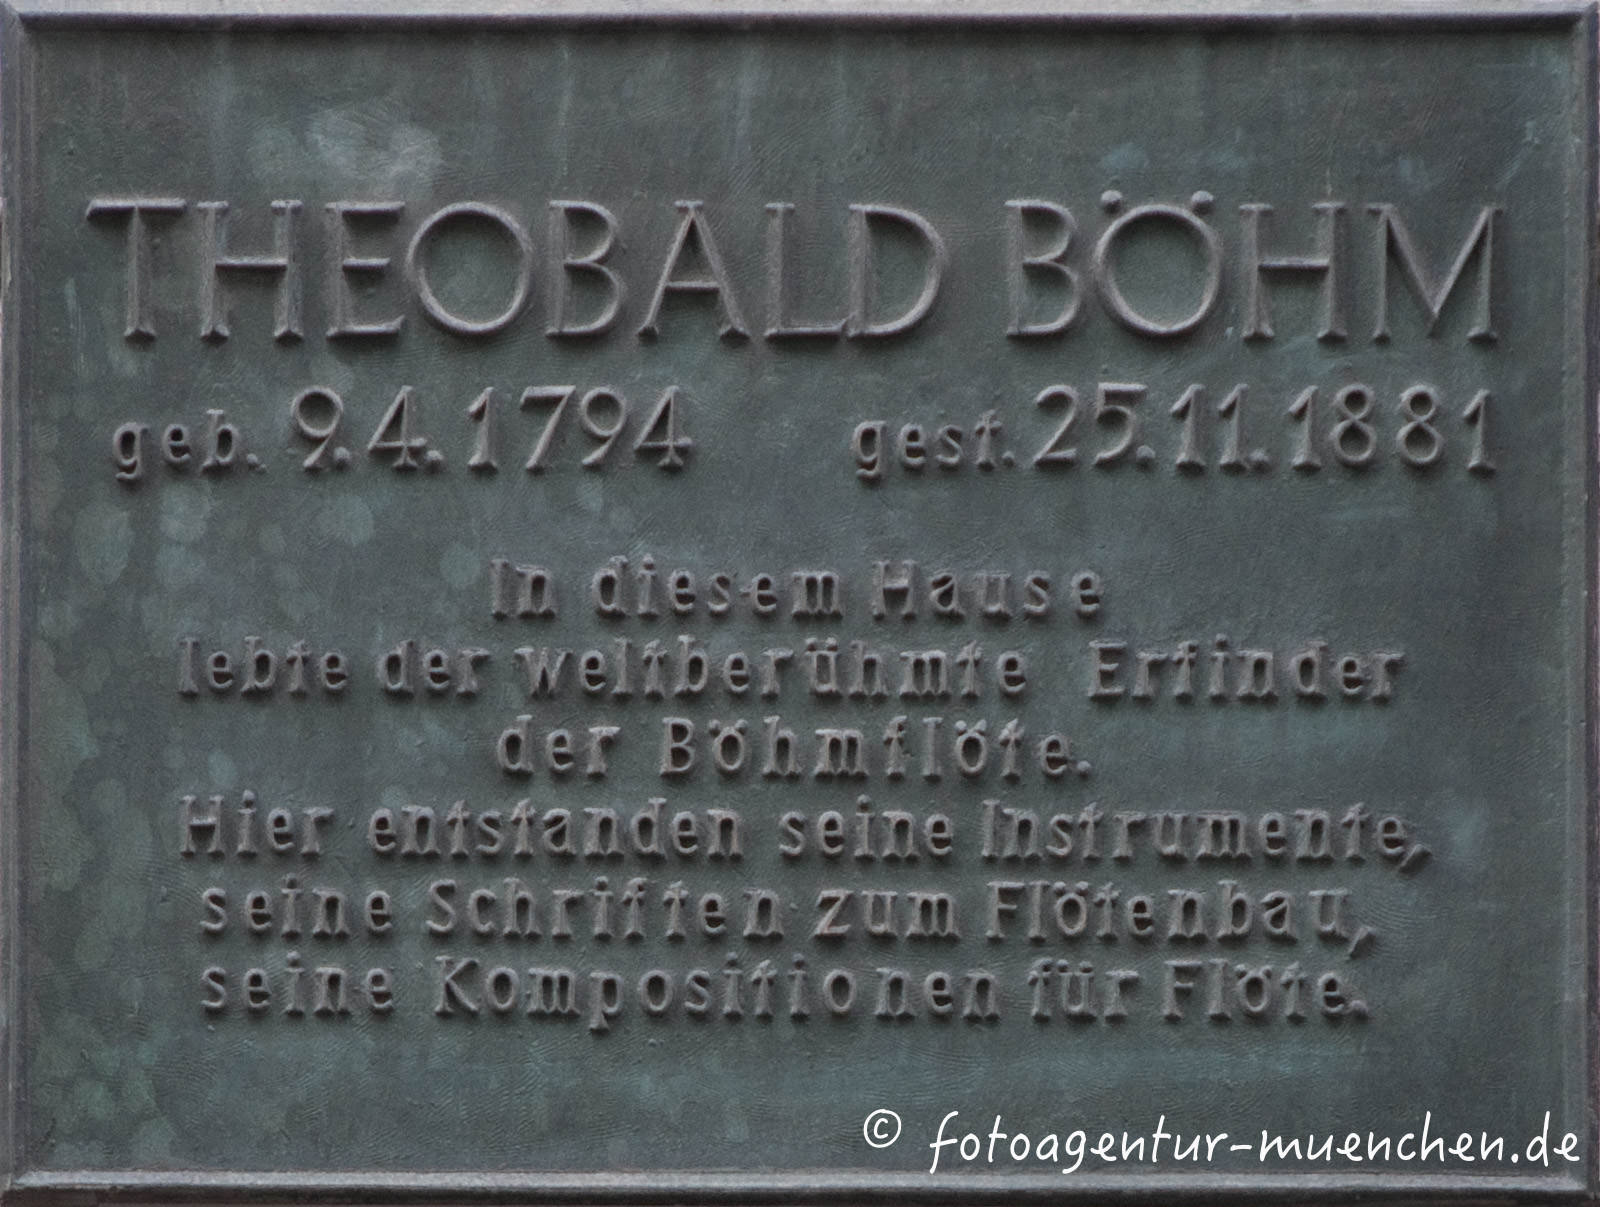 Theobald Böhm